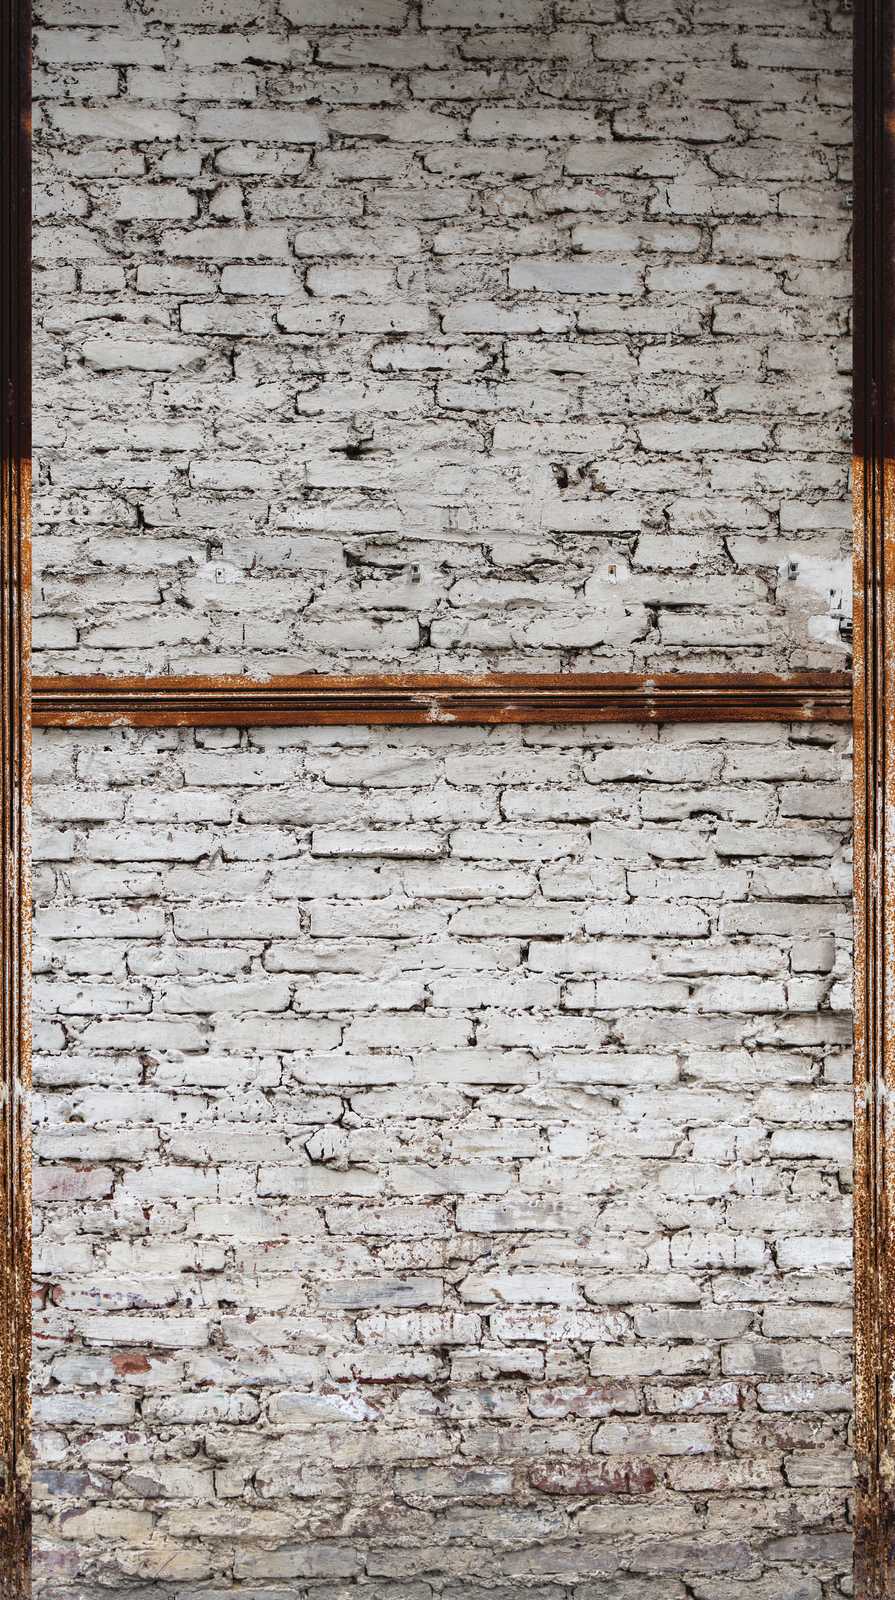             Wallpaper novelty - stone wall motif wallpaper 3D white brick
        